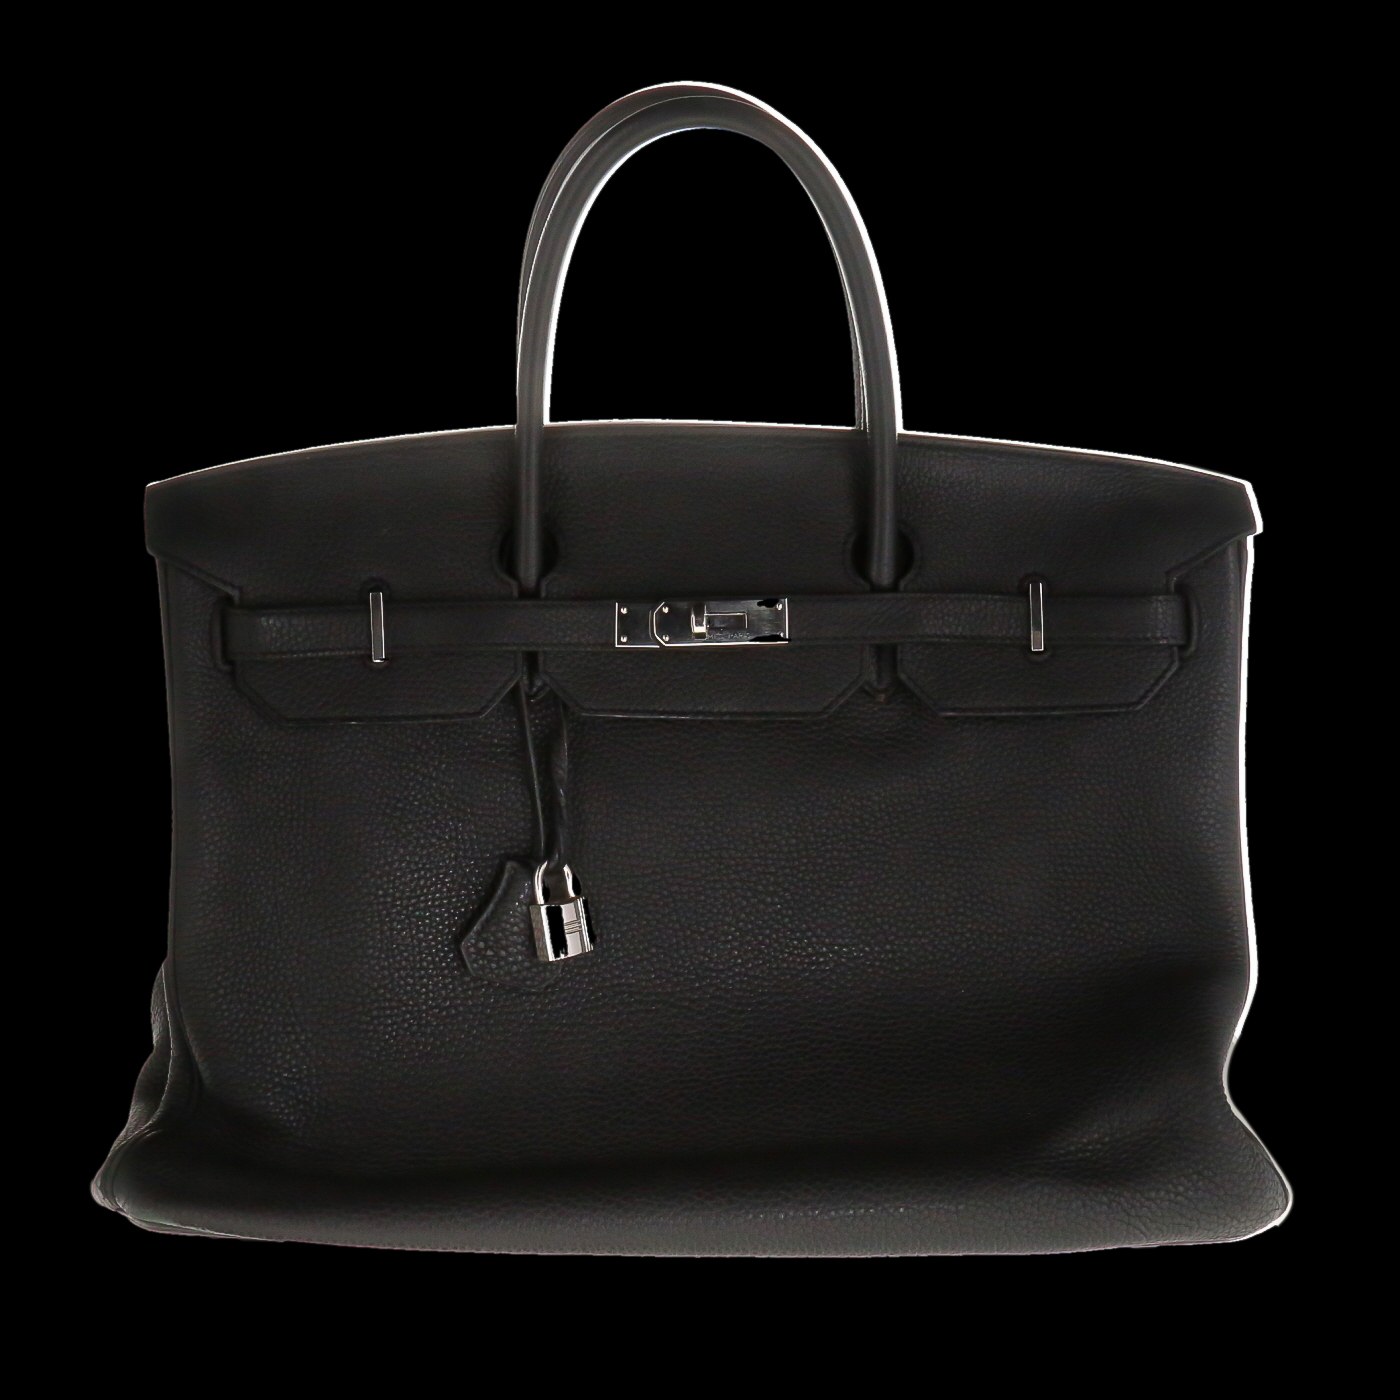 birkin bag black leather